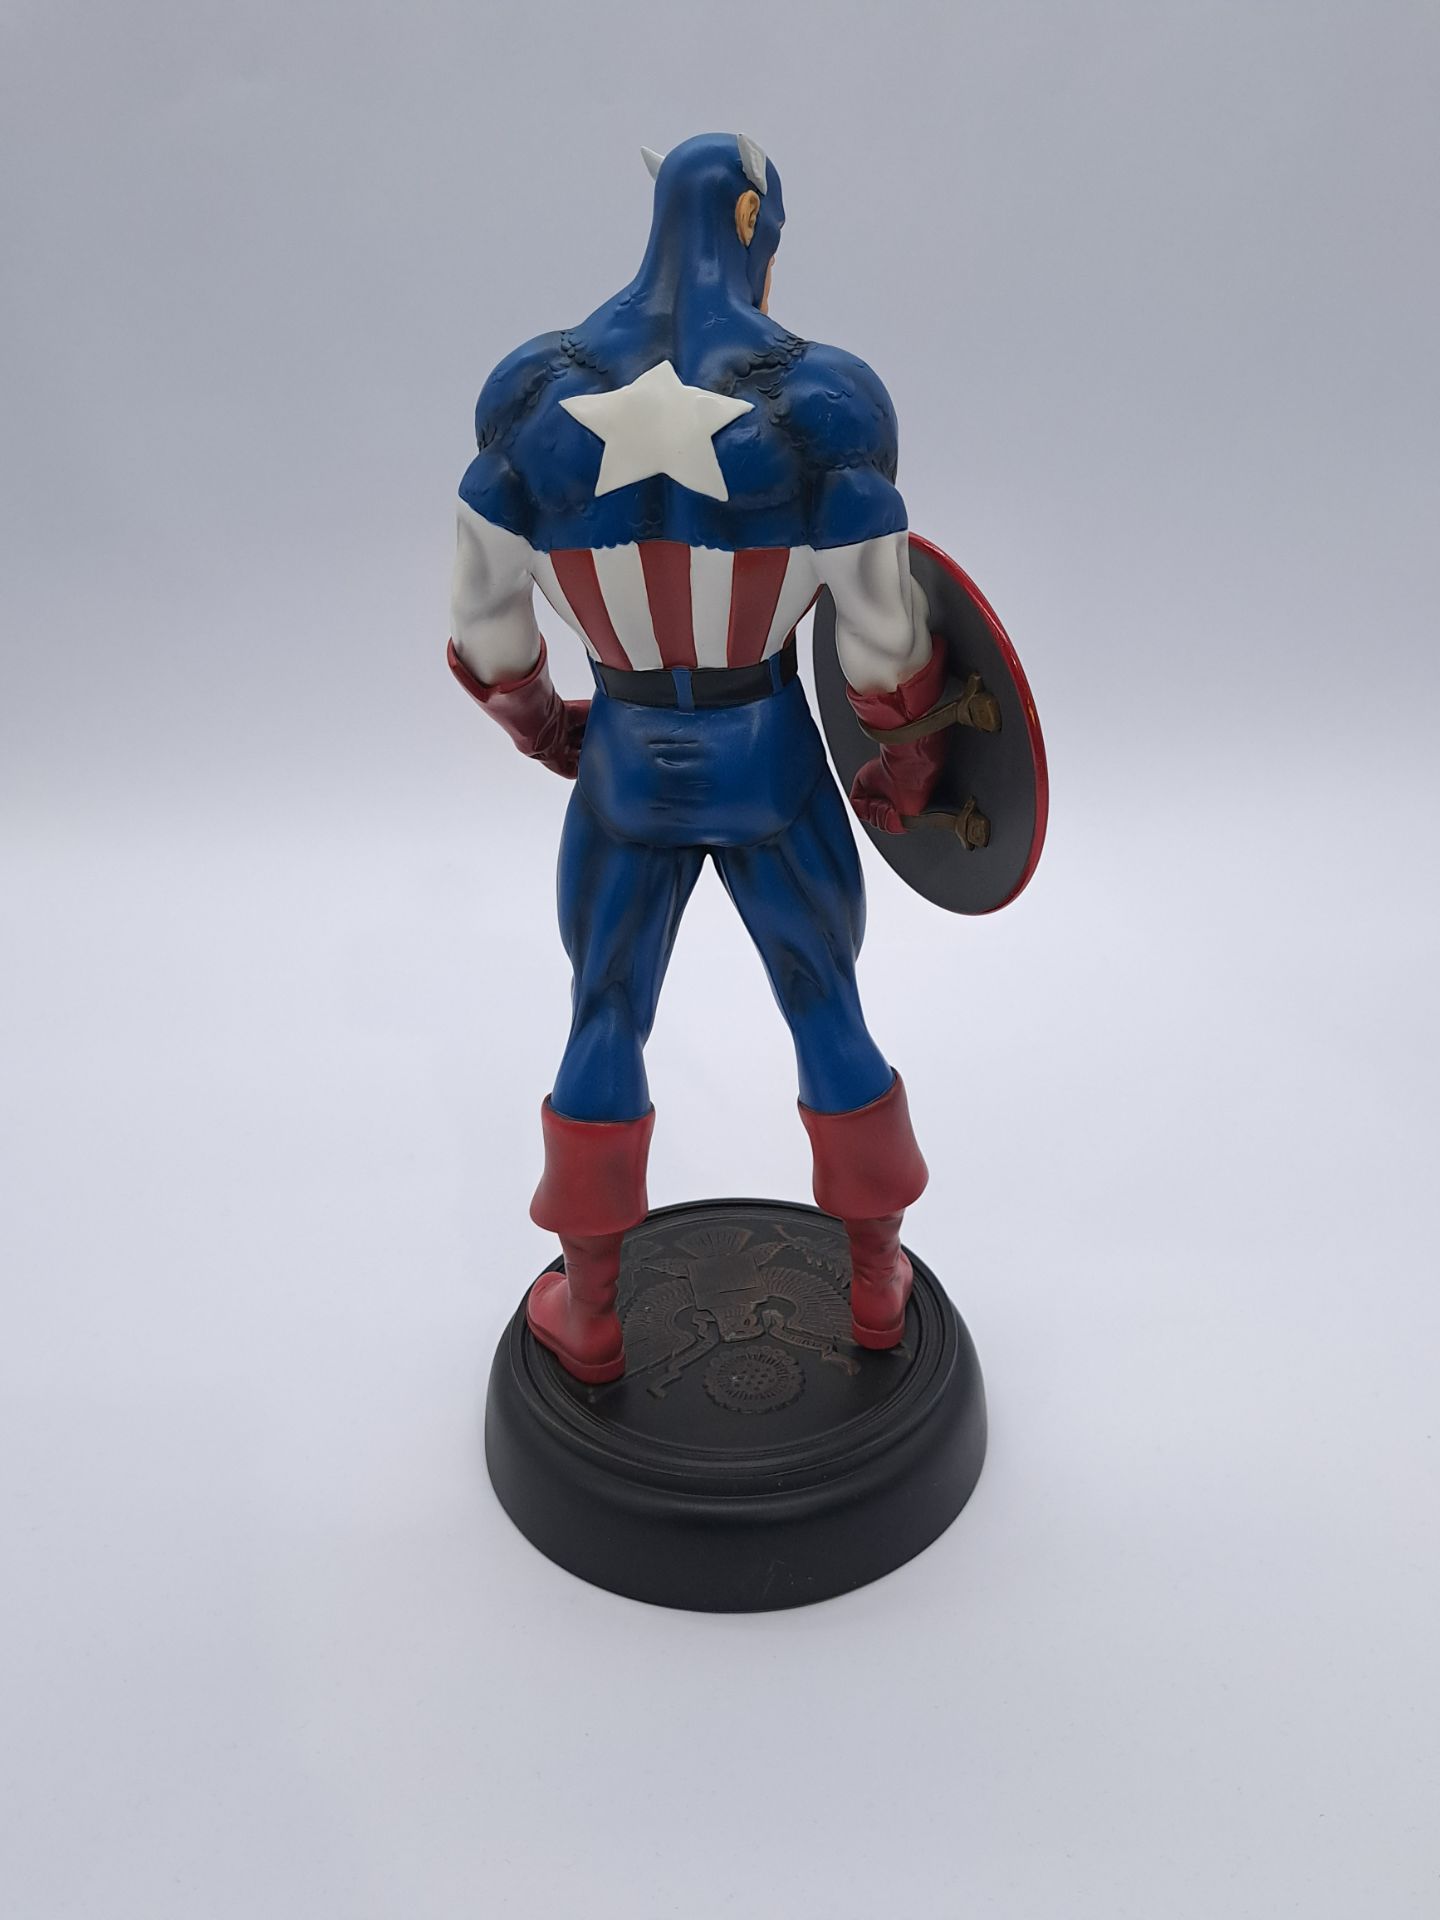 Bowen Design Classic Captain America Statue 2345 of 2500 - Image 2 of 3